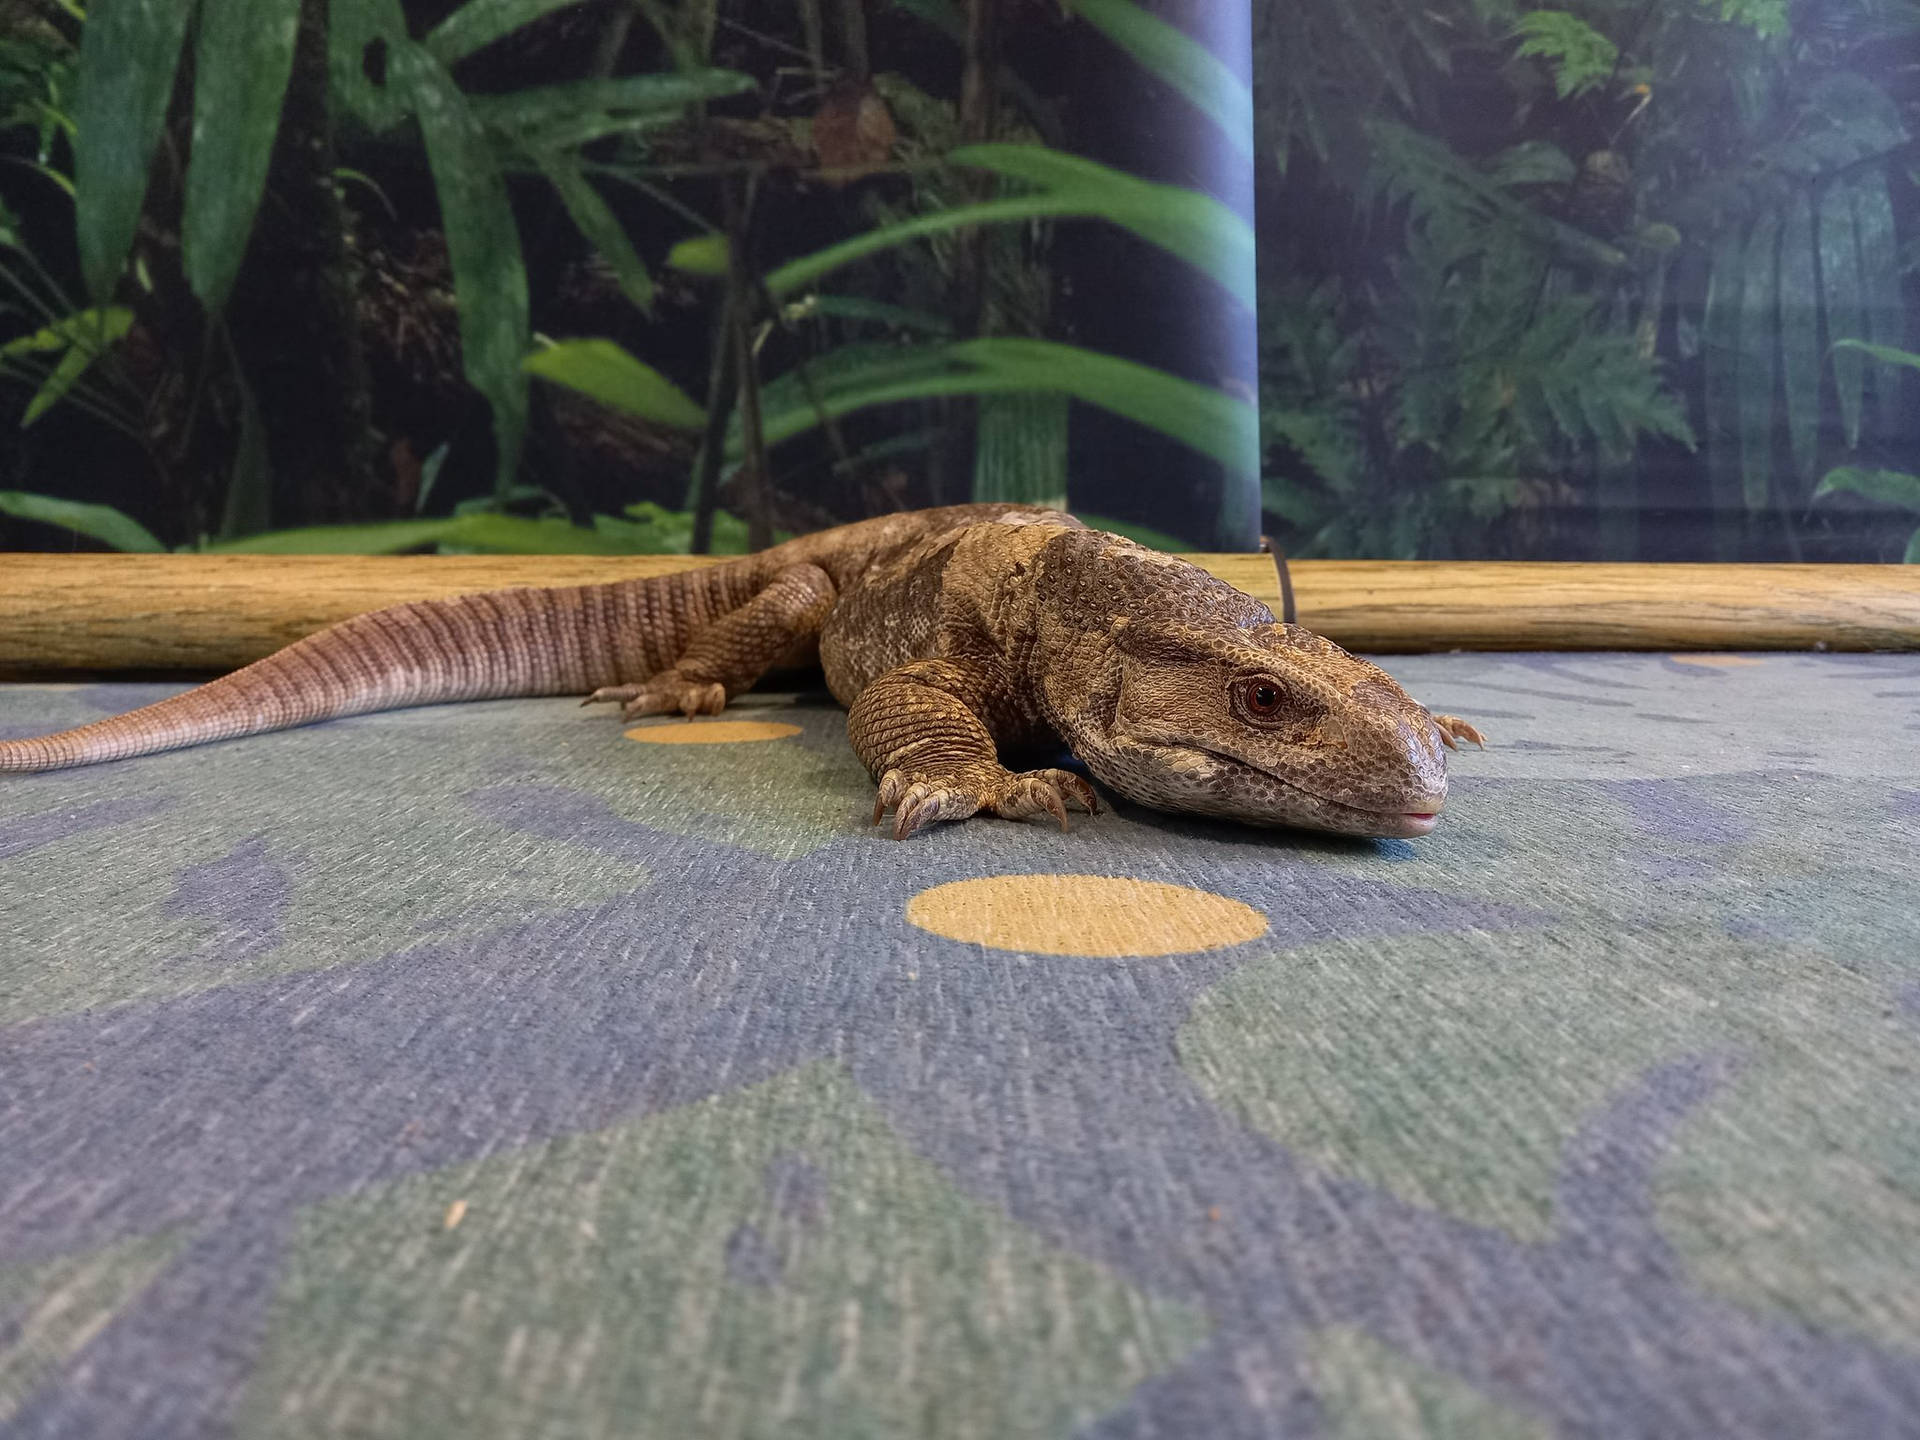 Brown Savannah Monitor Lizard On A Carpet Wallpaper